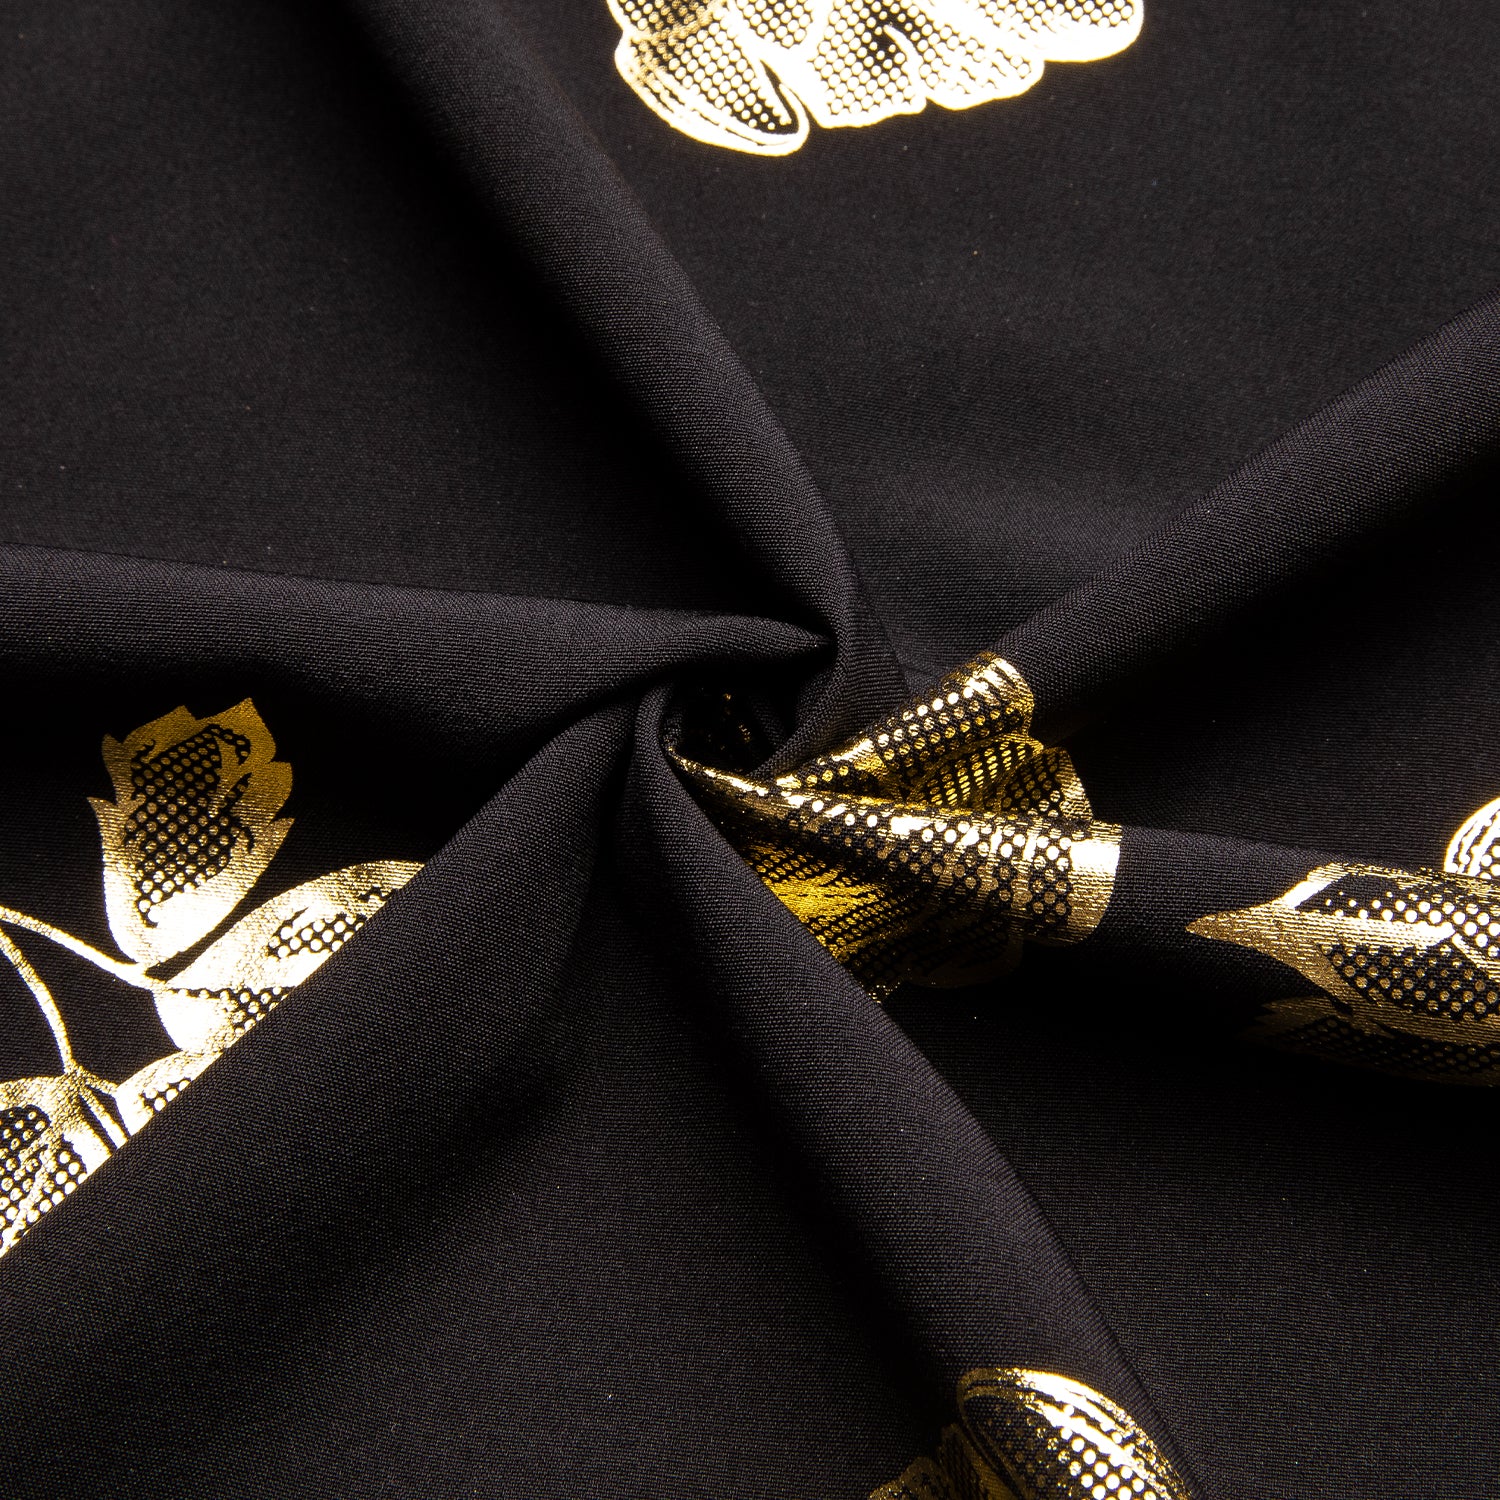 New Black Gold Floral Silk Men's Long Sleeve Shirt